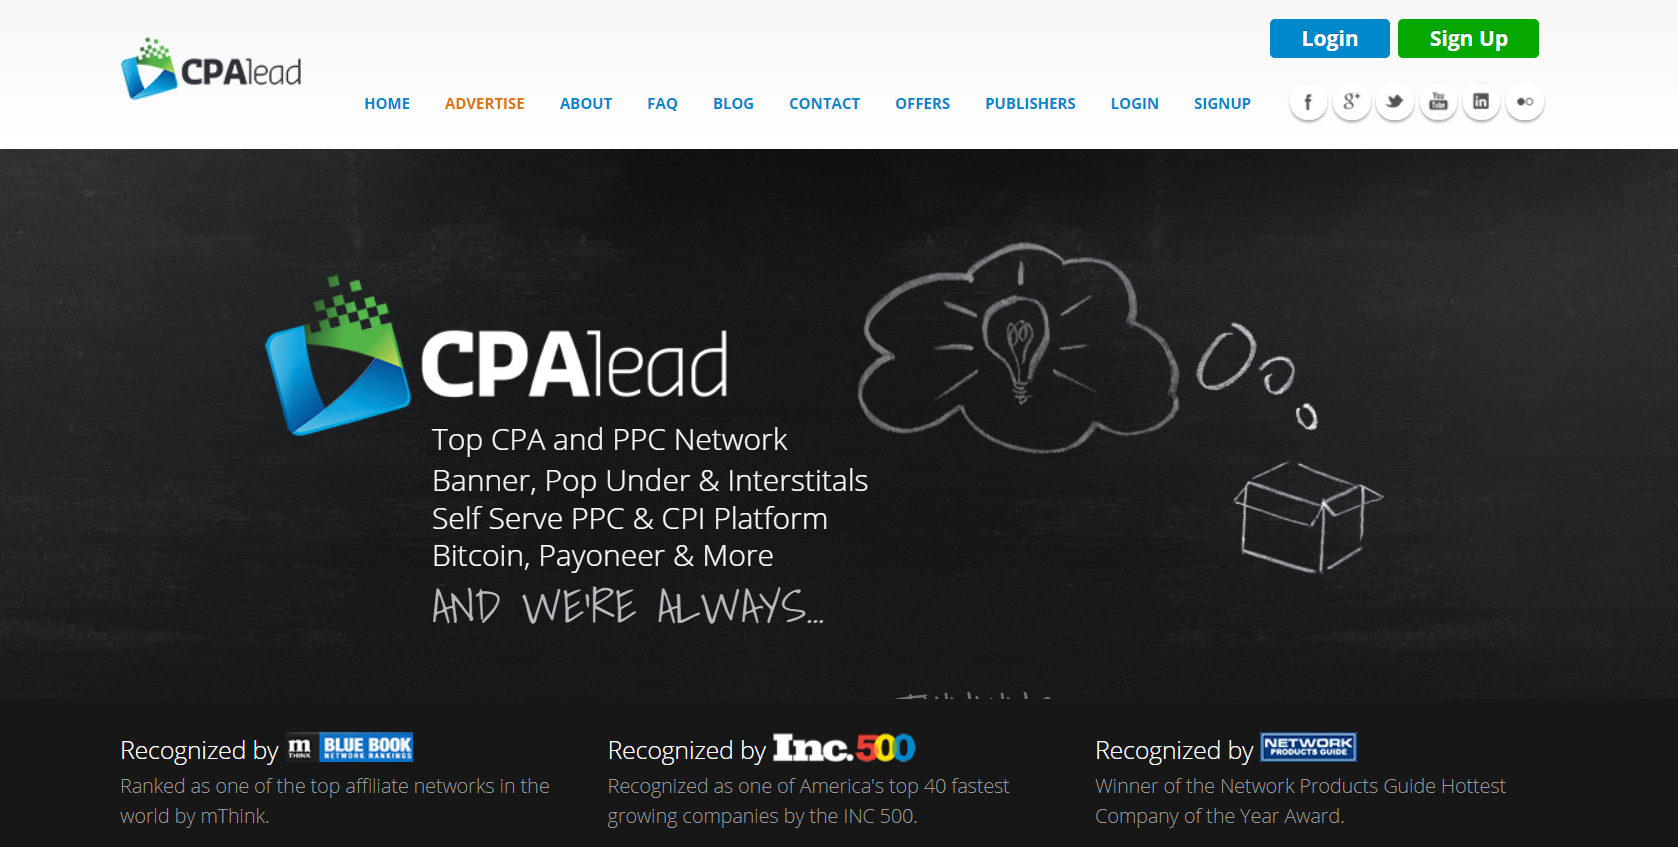 CPA Lead